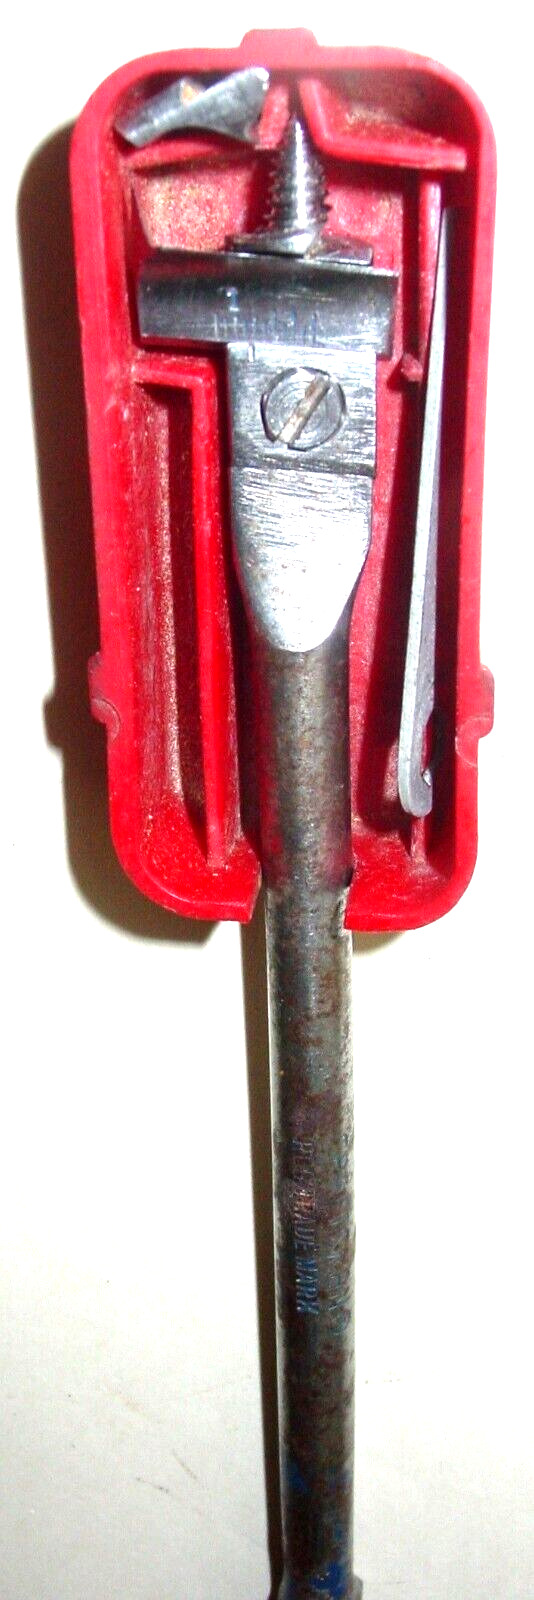 Vintage Craftsman Adjustable Wood Auger Brace Drill 2 Bit Tool USA